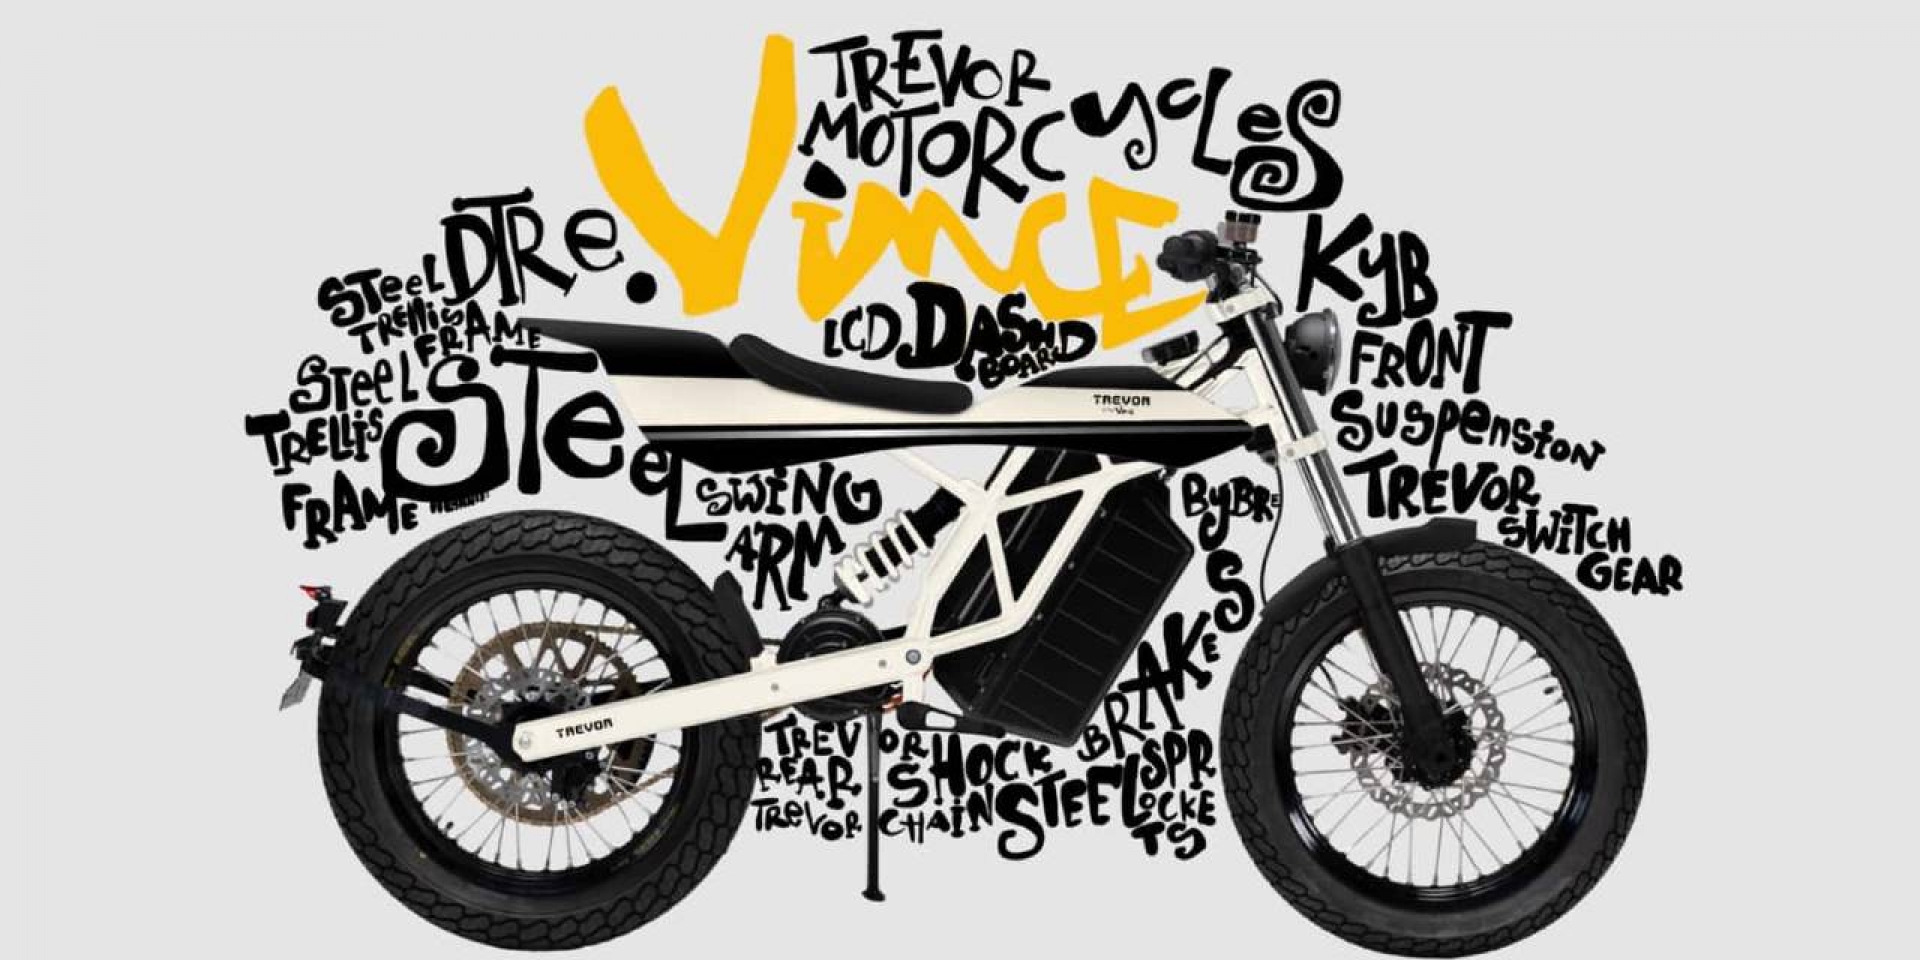 Trevor Motorcycles DTRe Vince：15匹馬力、47.4 Nm扭力、KYB懸吊、ByBre剎車，跨界風格濃厚的電動Fun Bike！